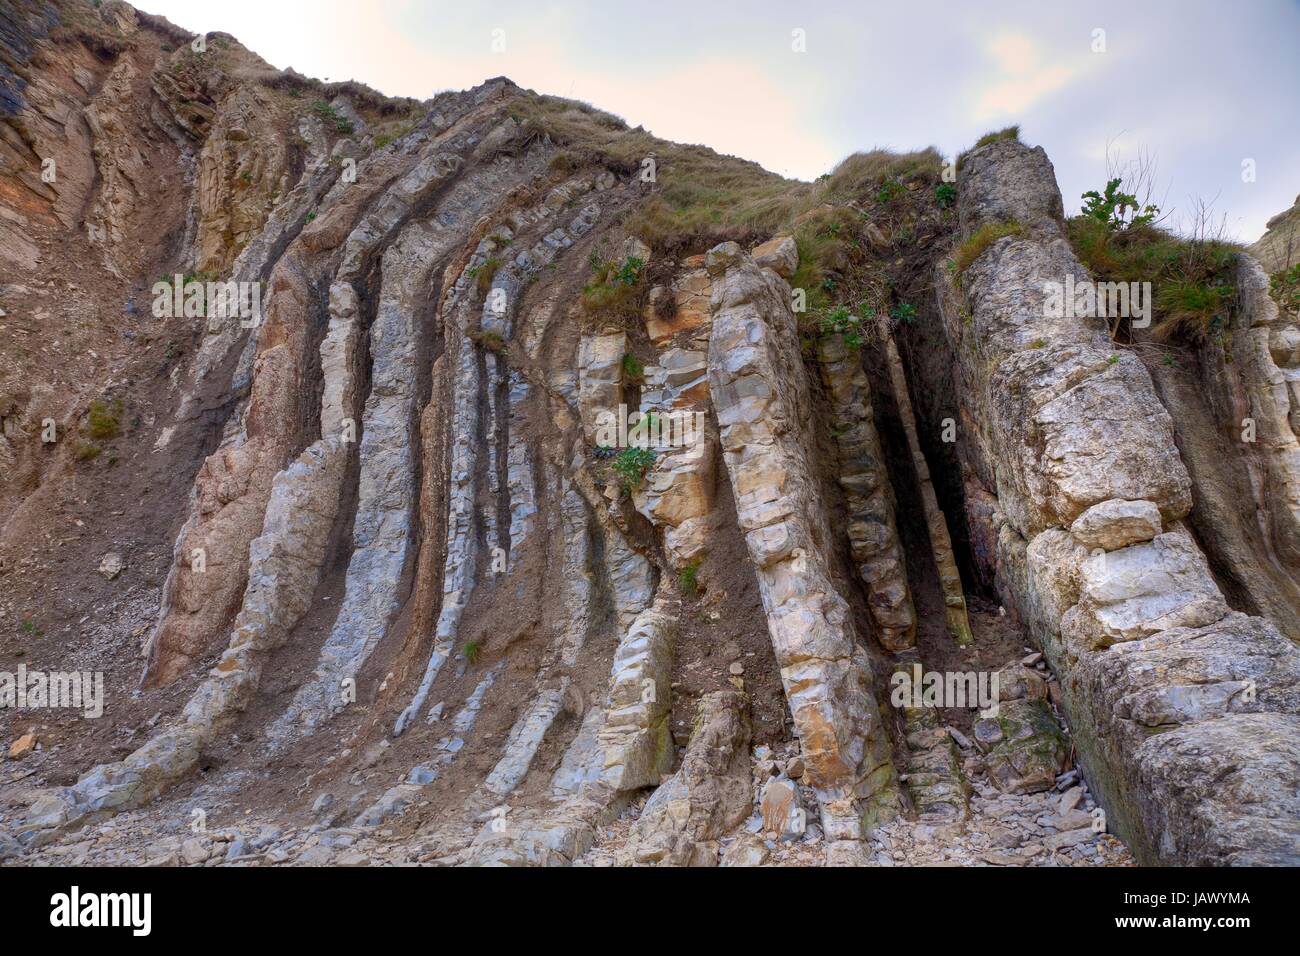 Rock formation at Man o' War Cove near Durdle Door on the Jurassic Coastline, Dorset, England. Stock Photo